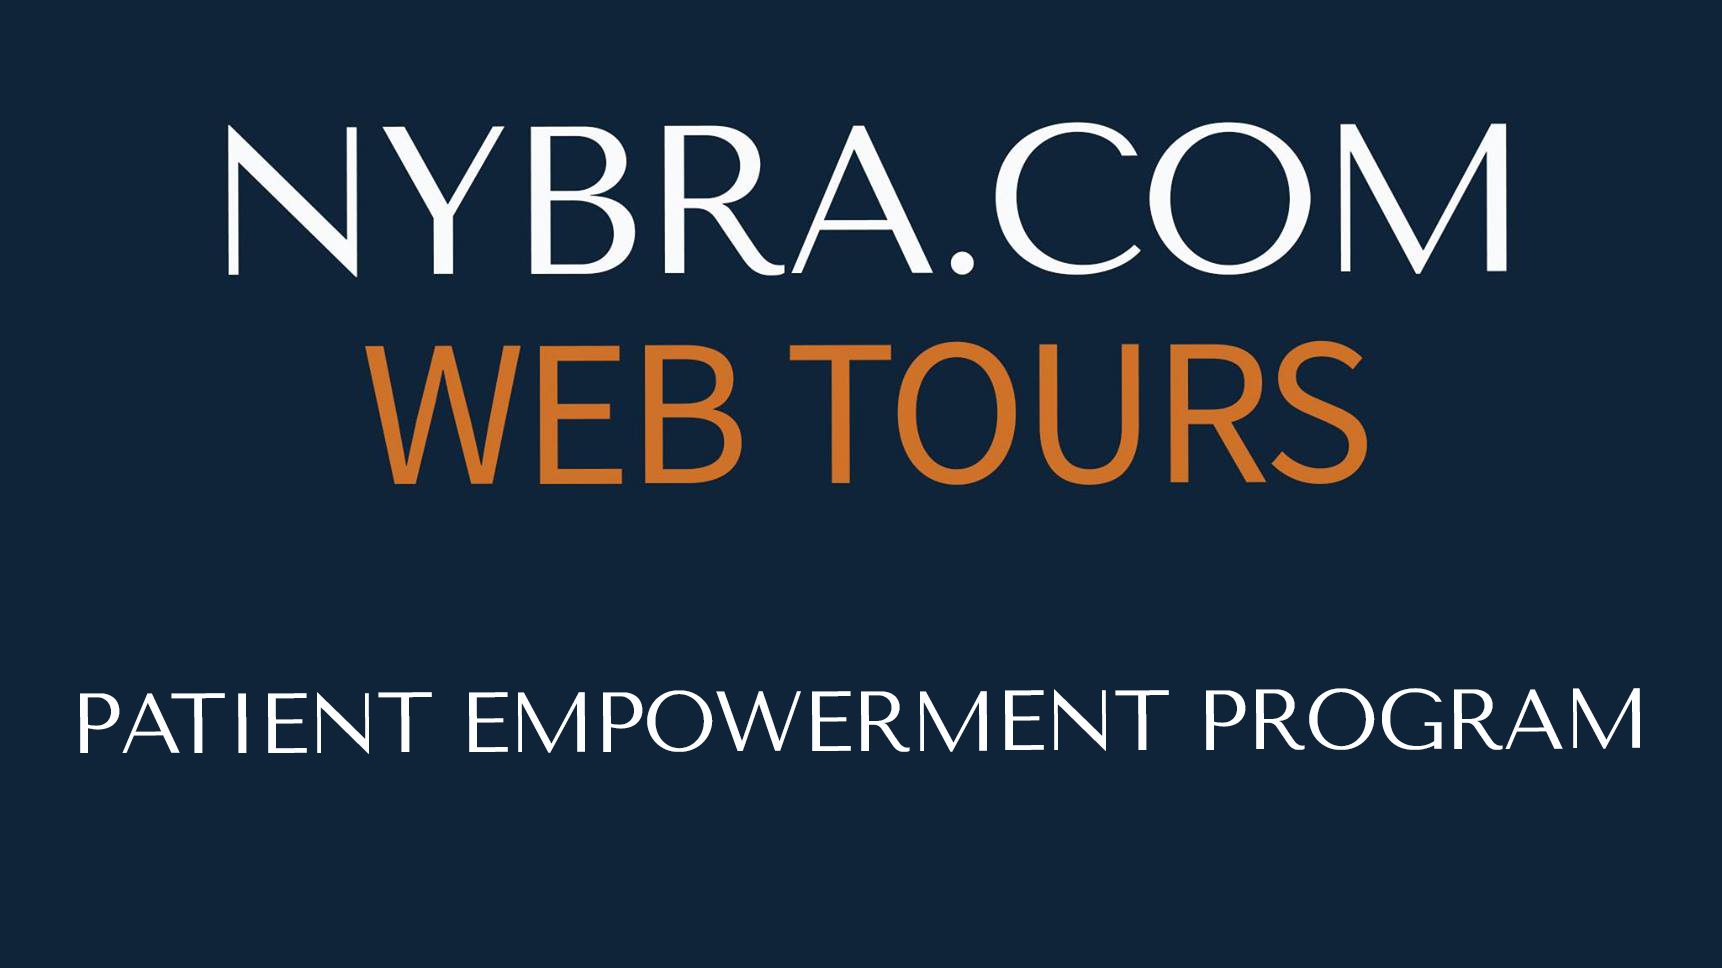 NYBRA.COM WEB TOURS: Patient Empowerment ProgramVertical Graphic